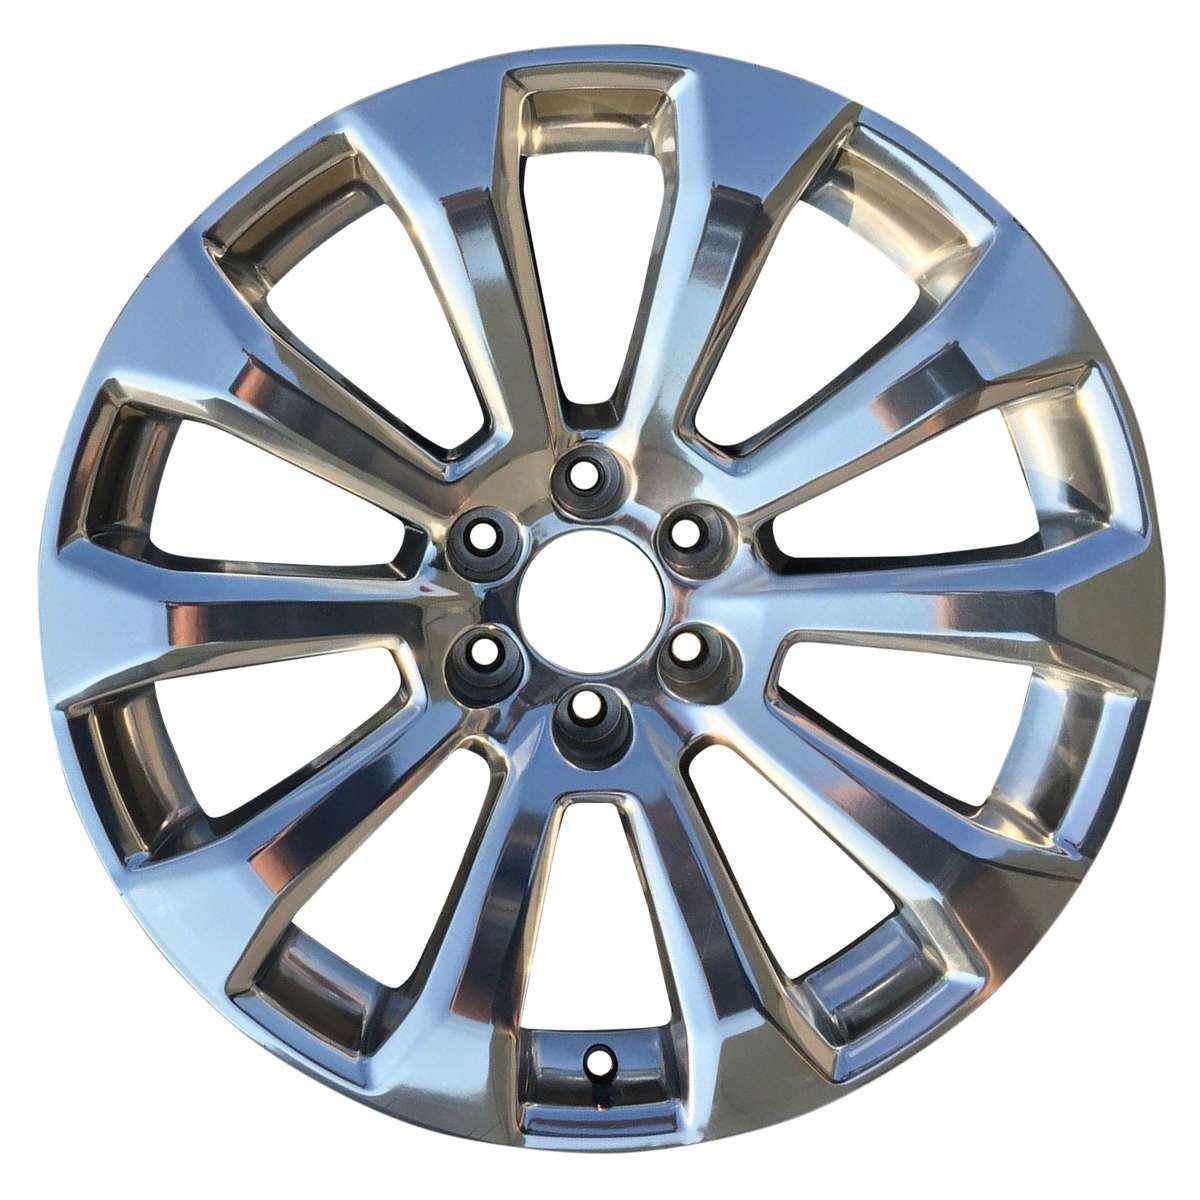 Mâm Lazang 2019 GMC Sierra 1500 New 22' Replacement Wheel Rim W234851V